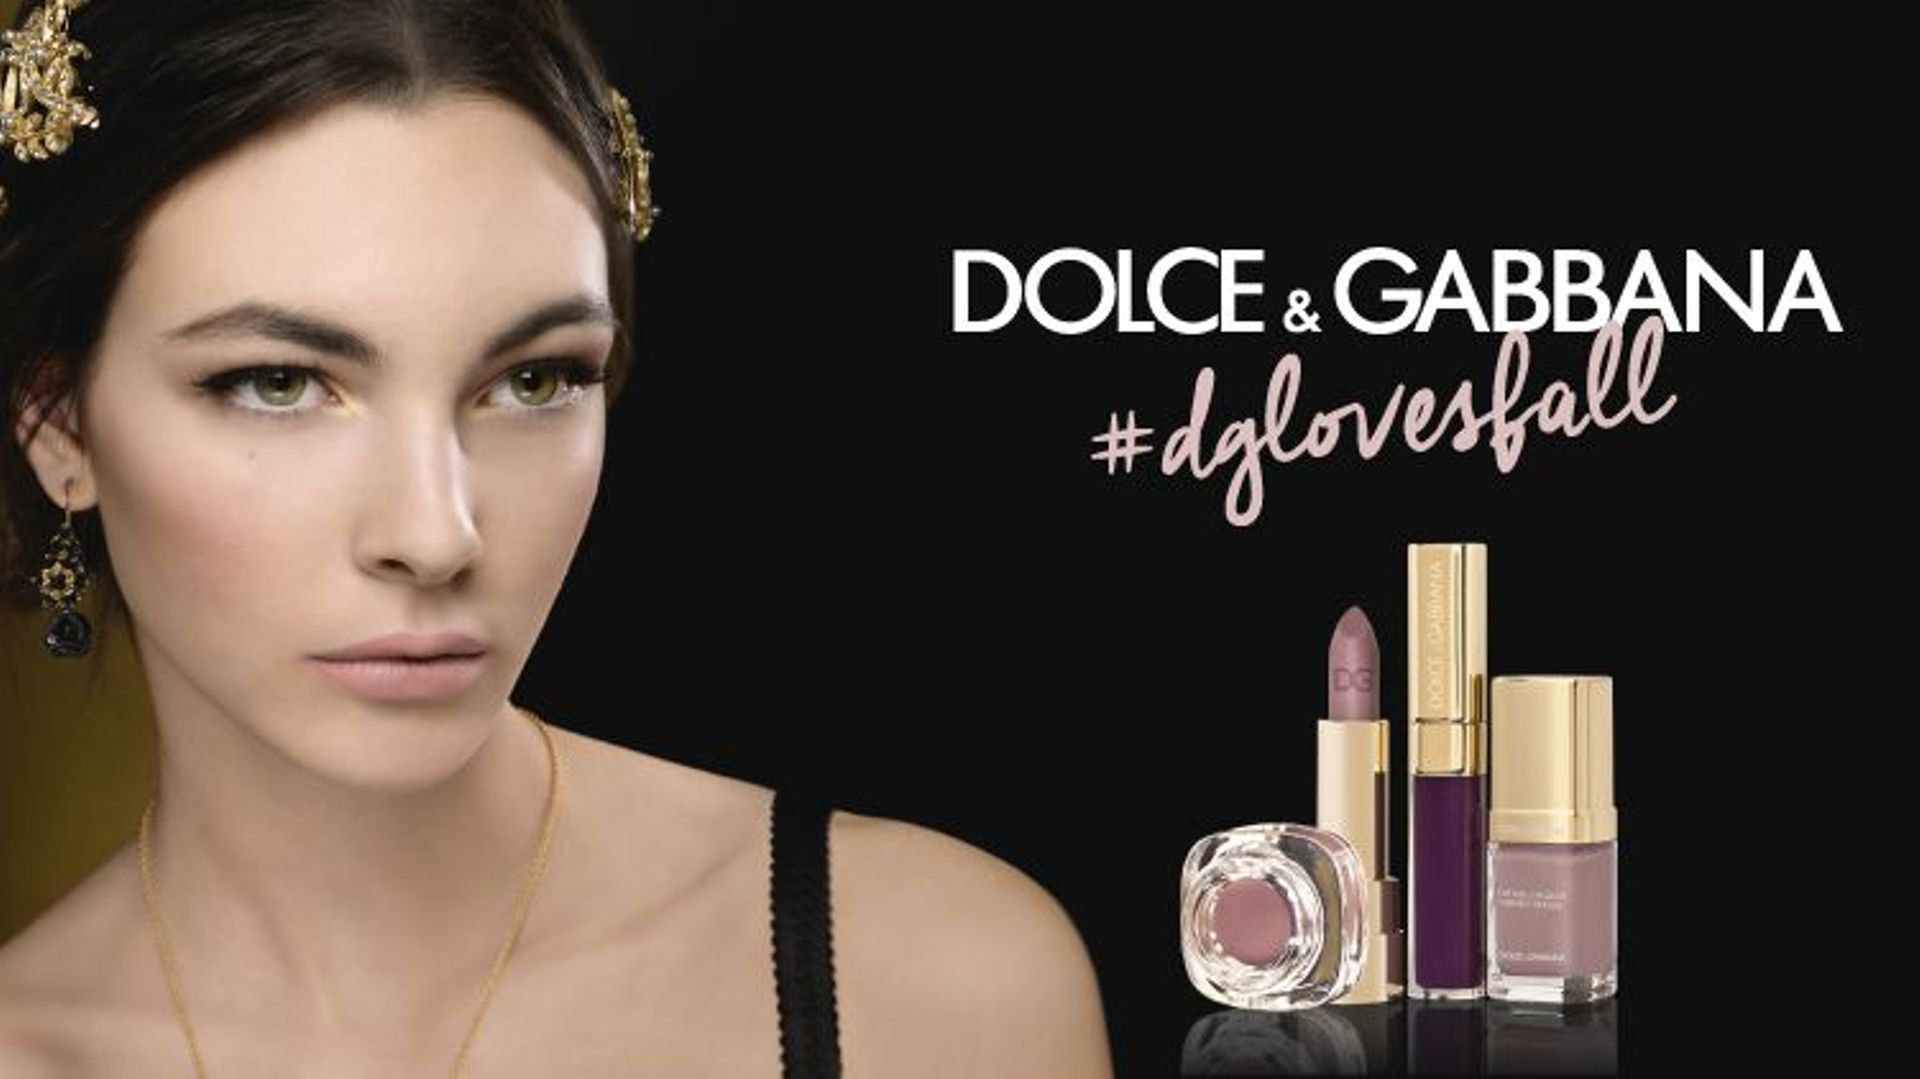 Dolce & Gabbana #dglovesfall